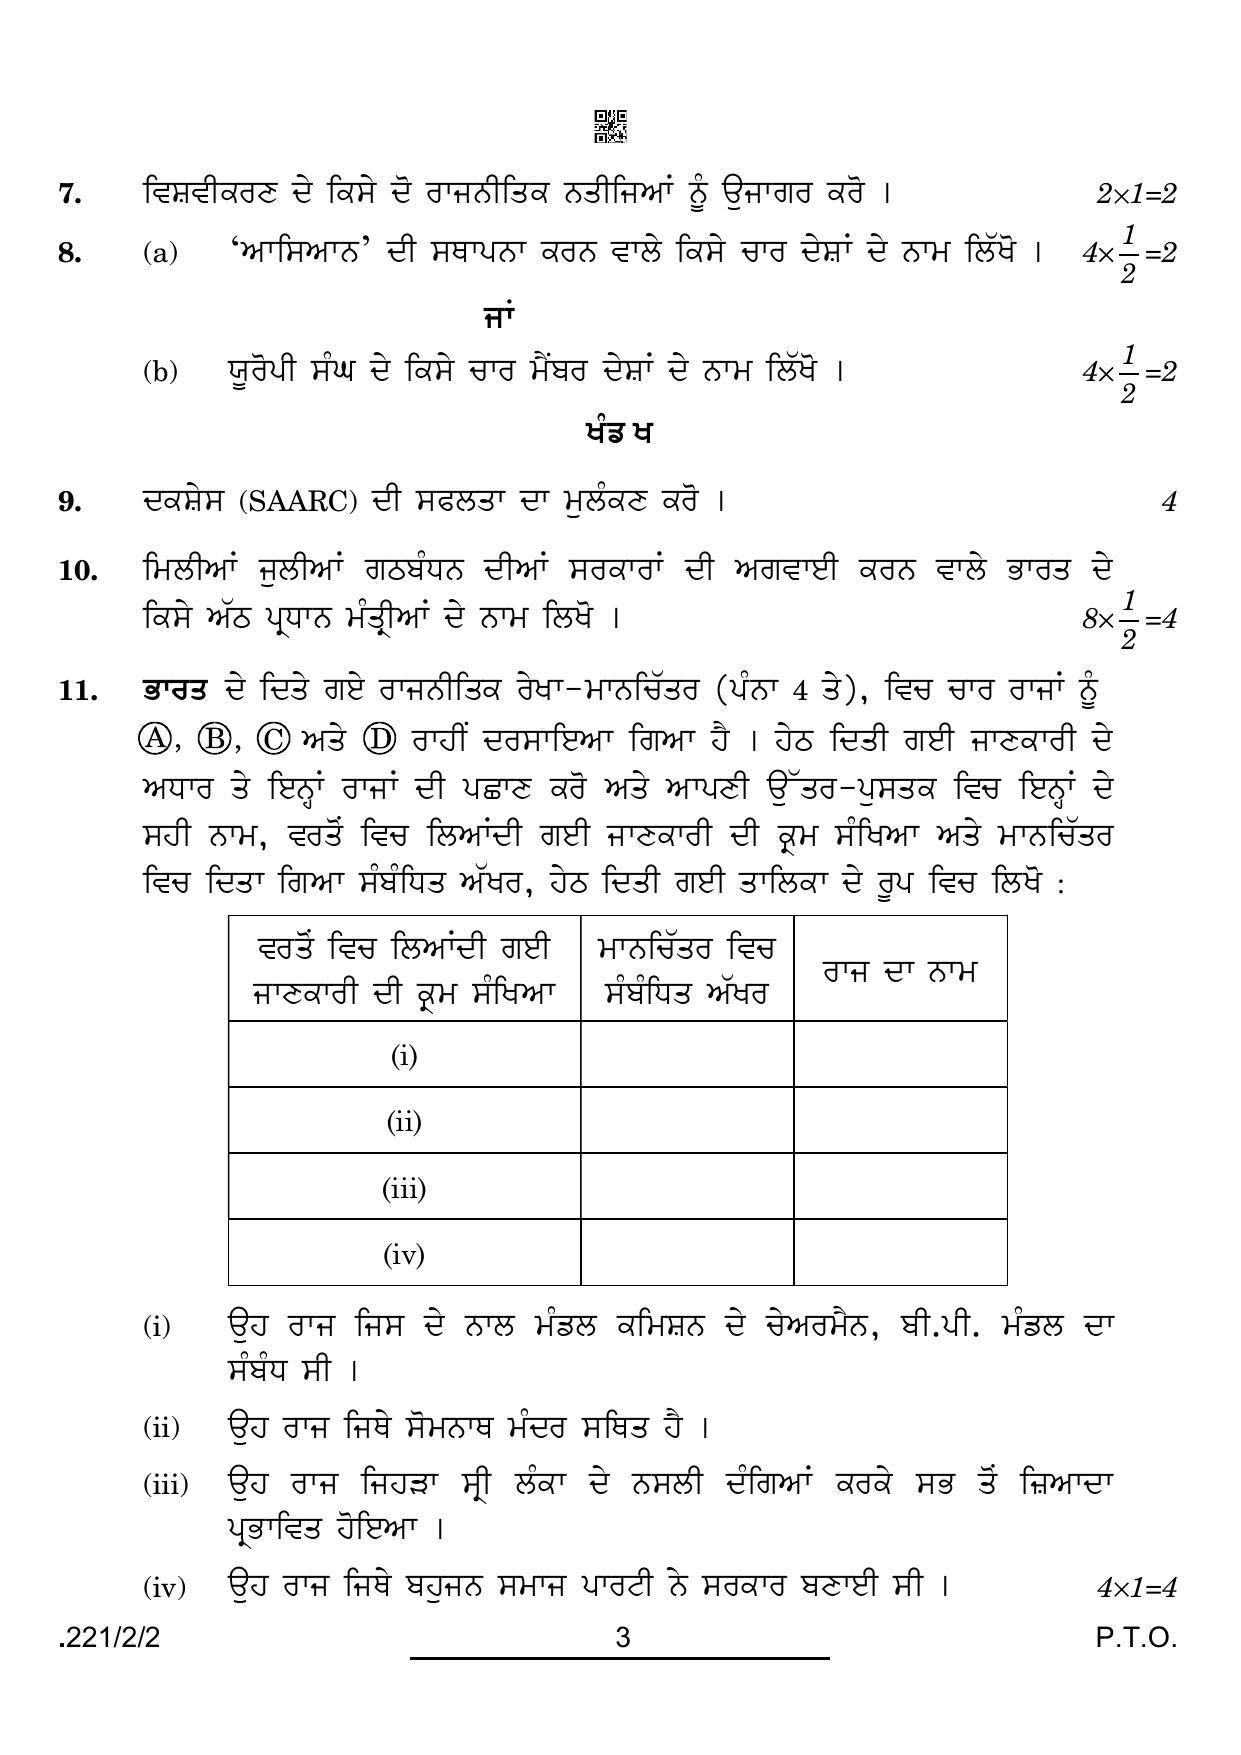 CBSE Class 12 221-2-2 Political Science Punjabi Version 2022 Question Paper - Page 3